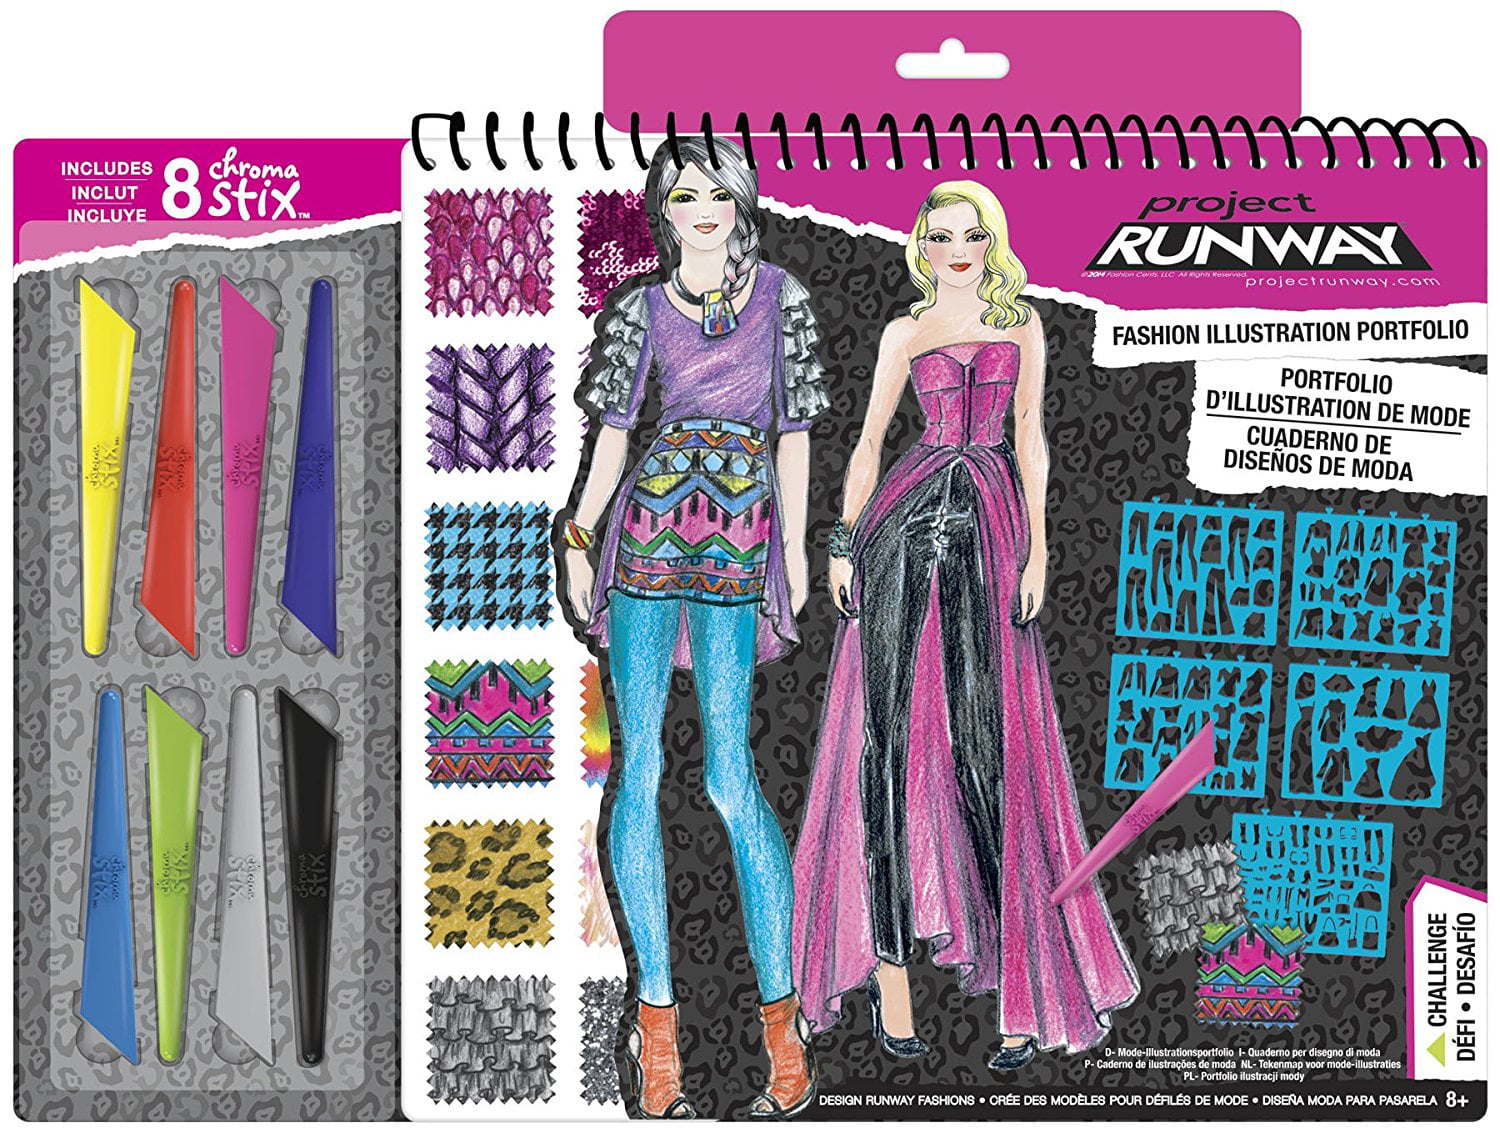 Fashion Angels Project Runway Fashion Illustration Portfolio with Chroma Stix Walmart.com